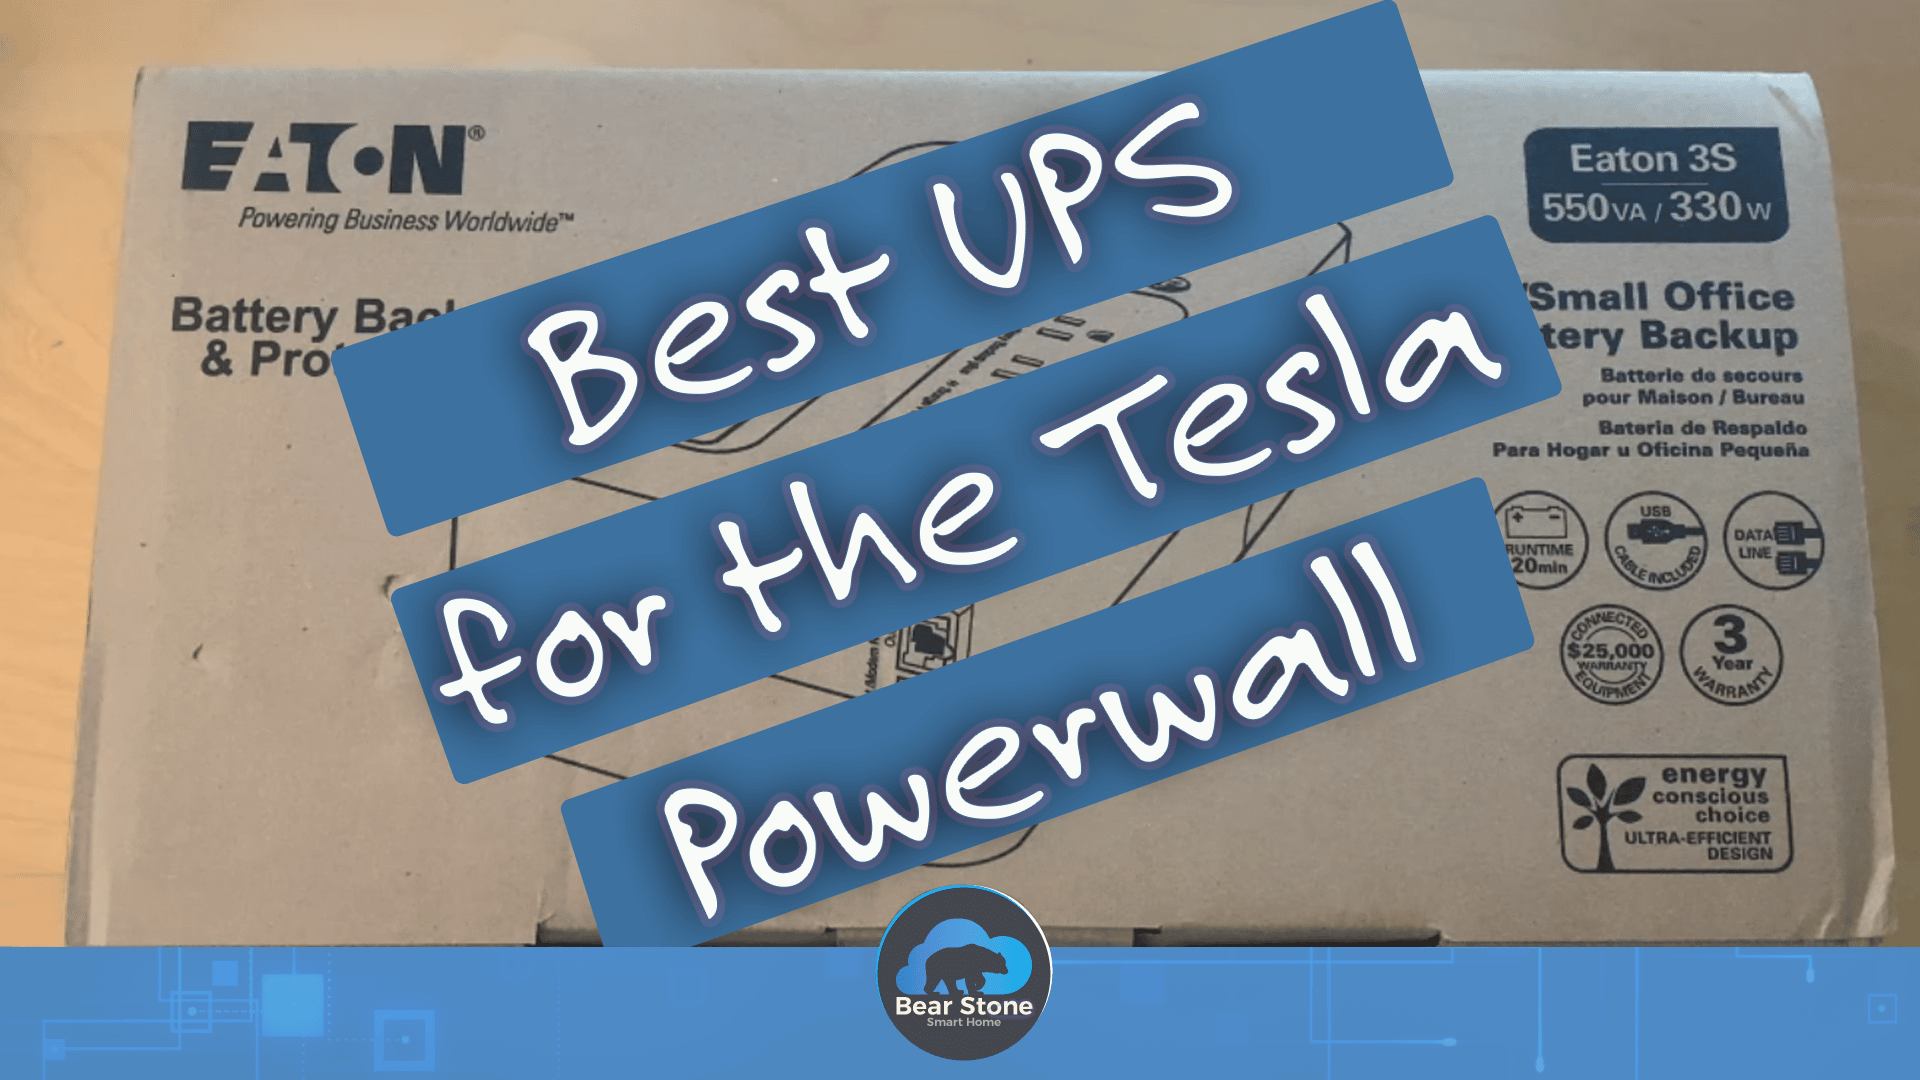 Why I added the Eaton 3S UPS to my Tesla Powerwall Setup? 1